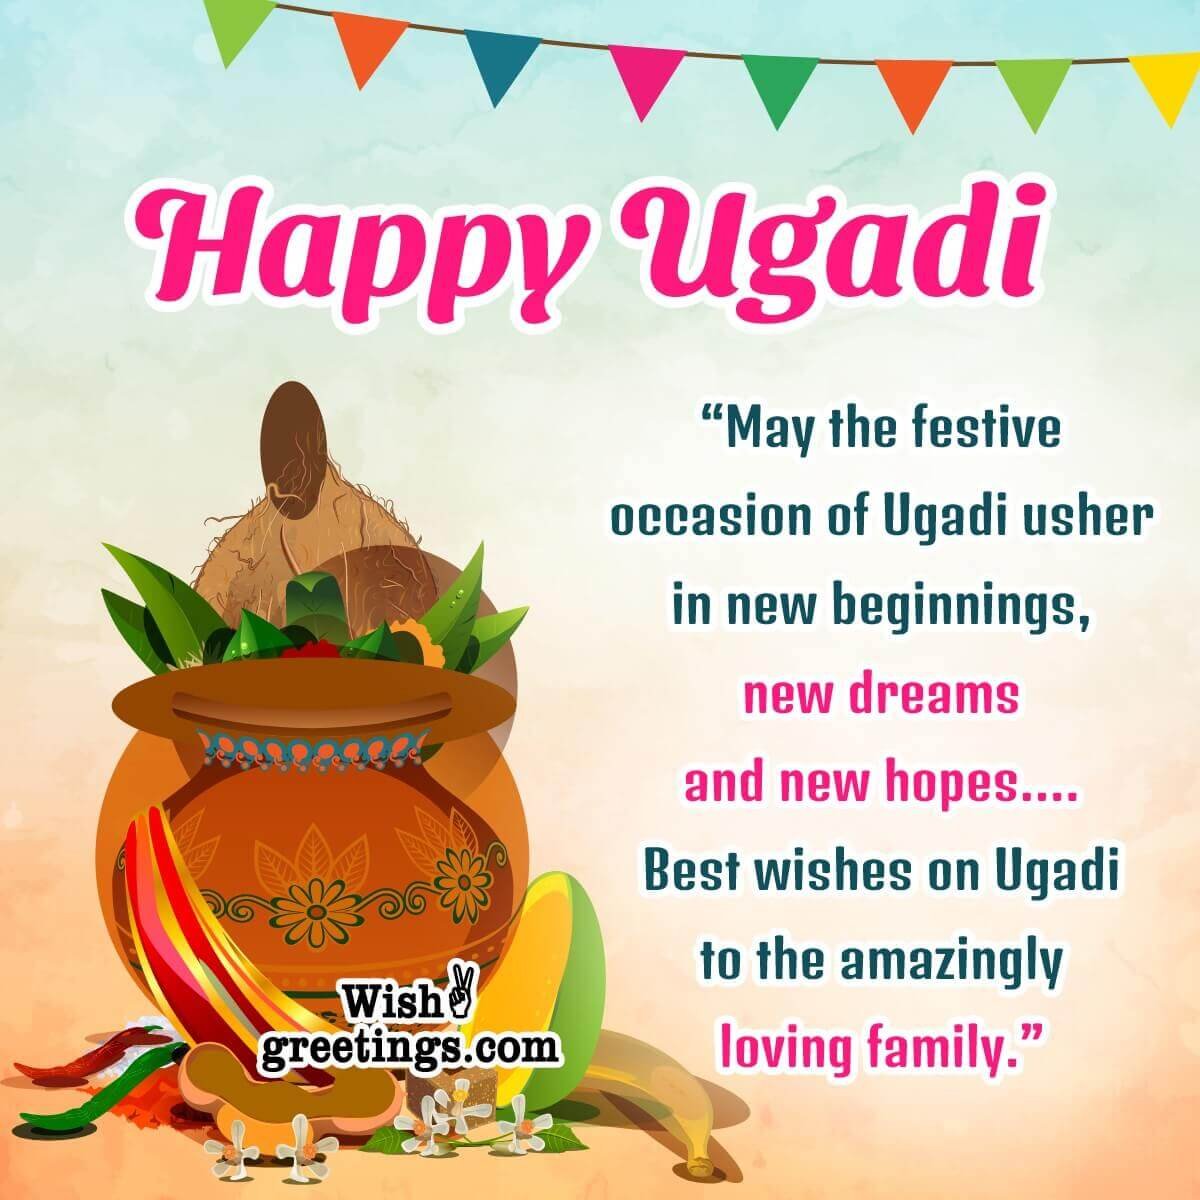 Happy Ugadi Greeting Image